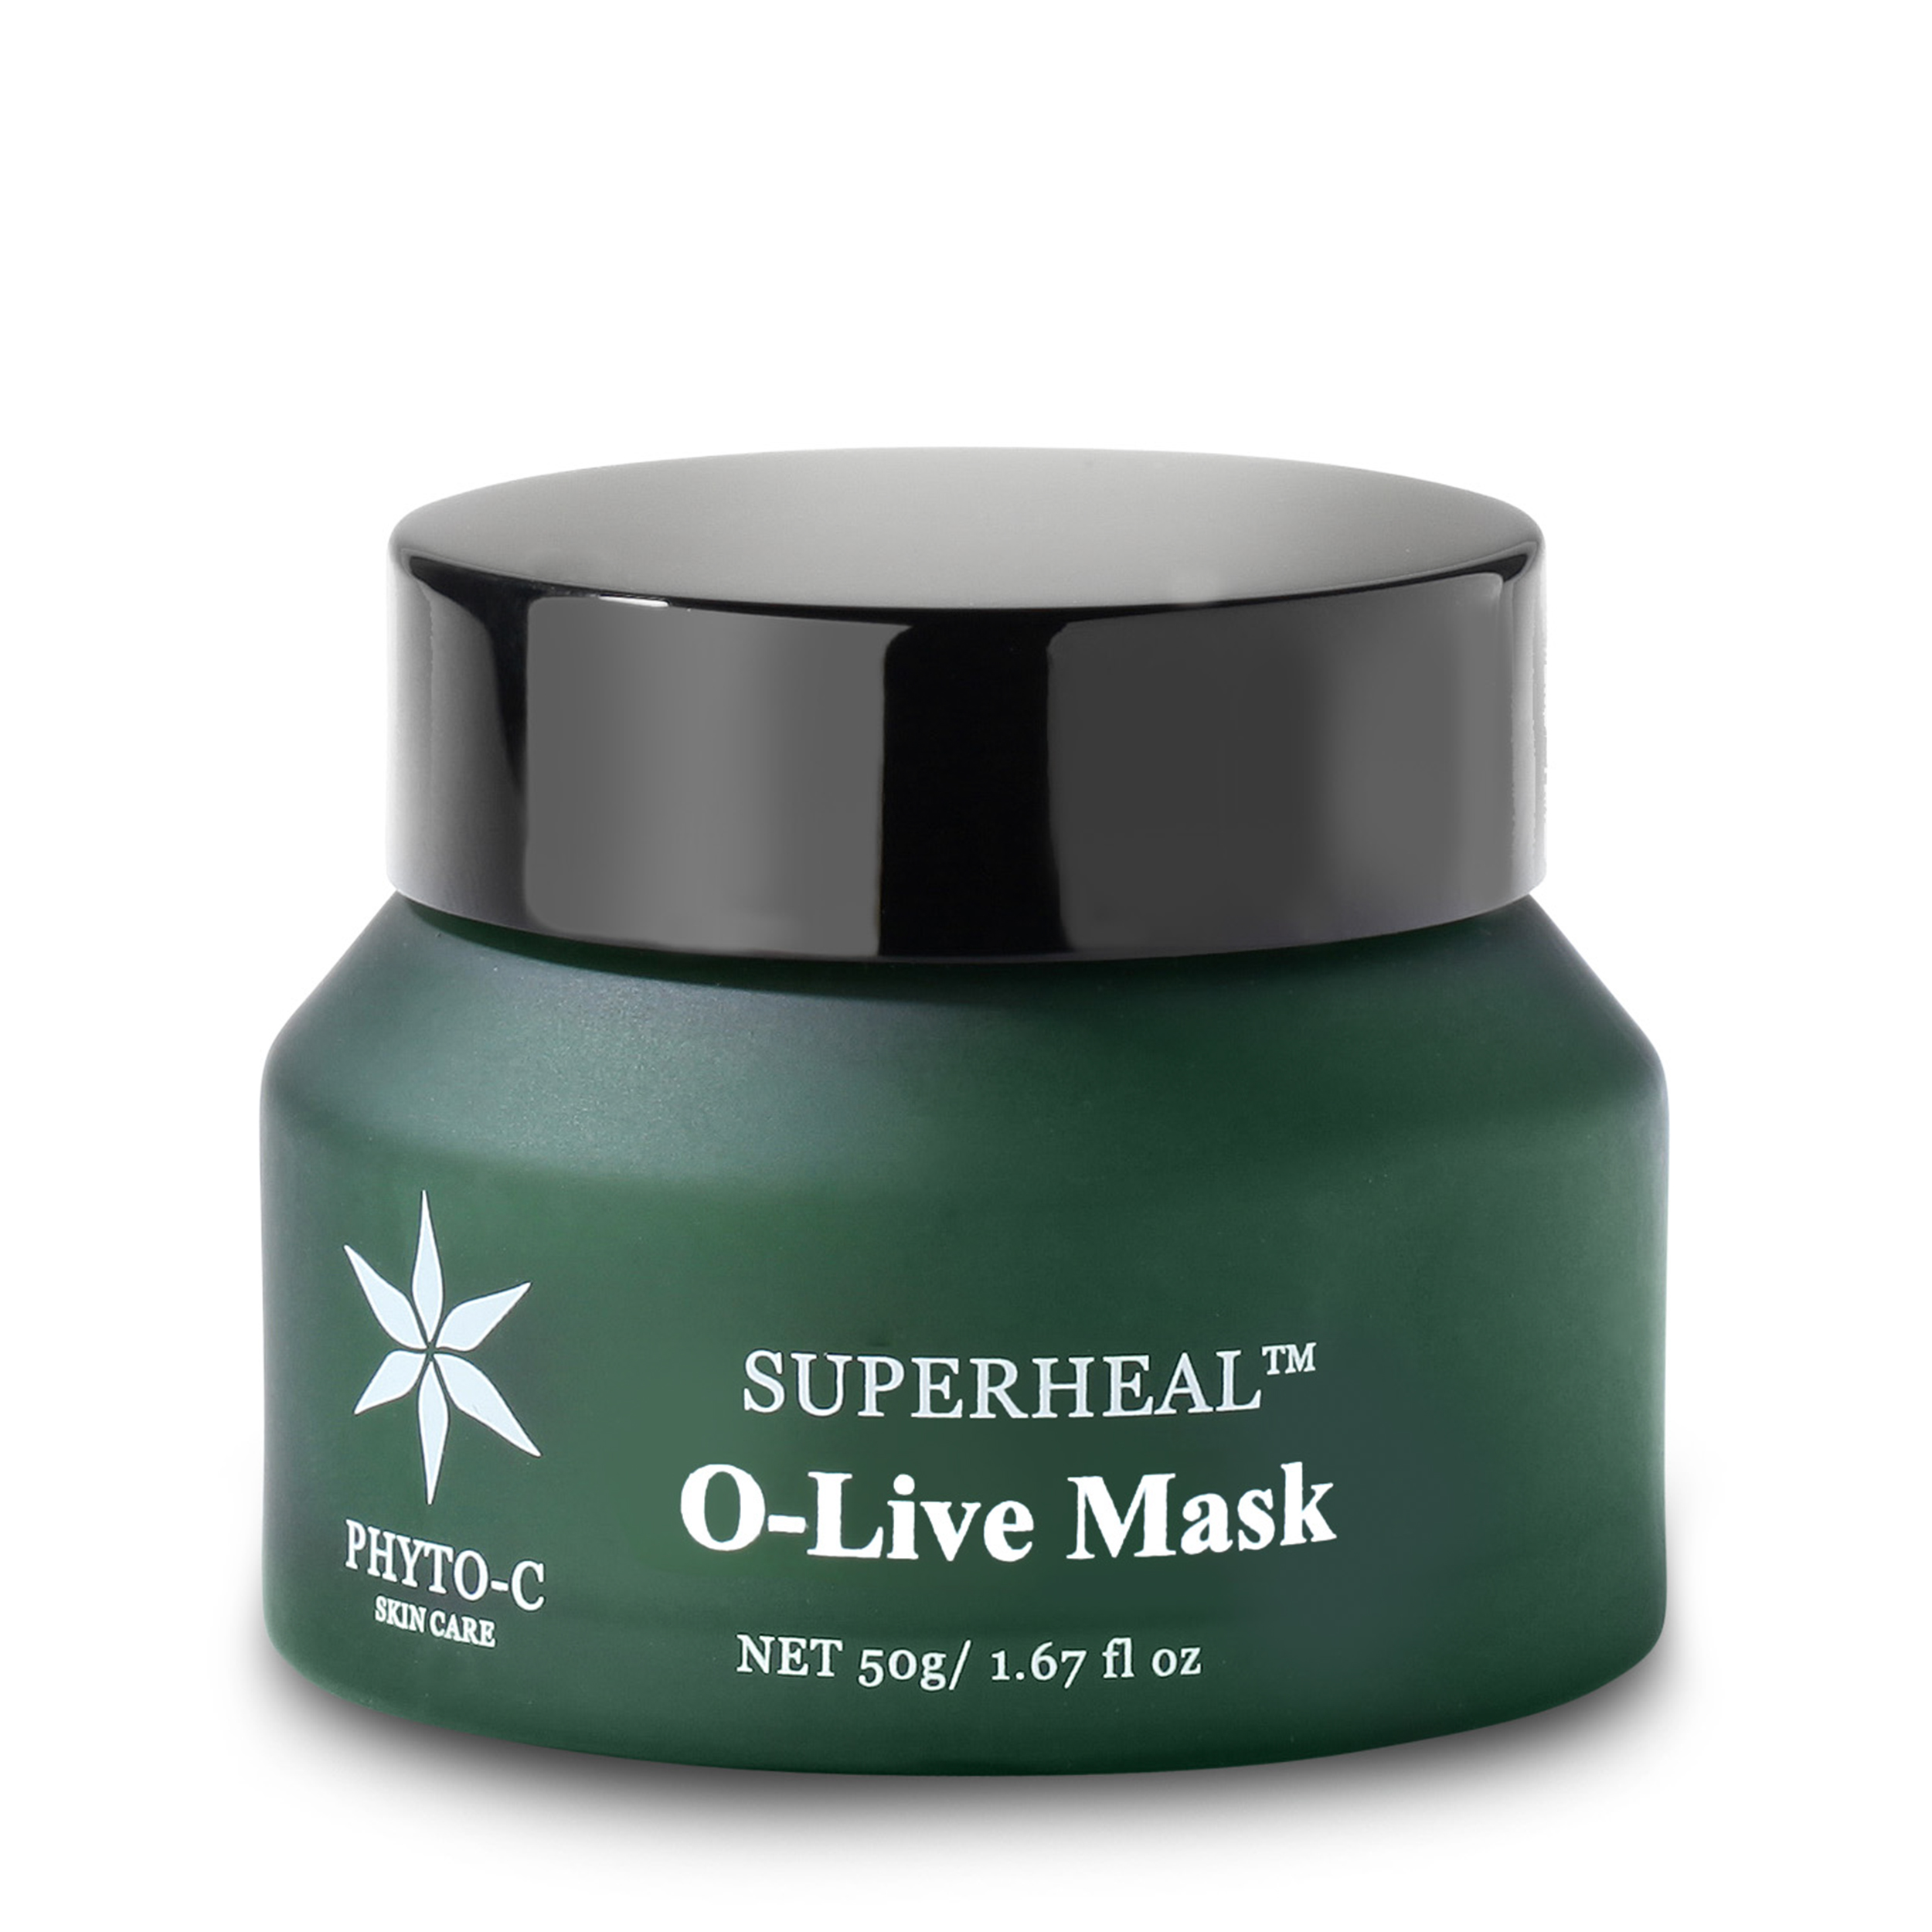 PHYTO-C PHYTO-C Омолаживающая маска для лица Superheal O-Live 50 гр от Foambox